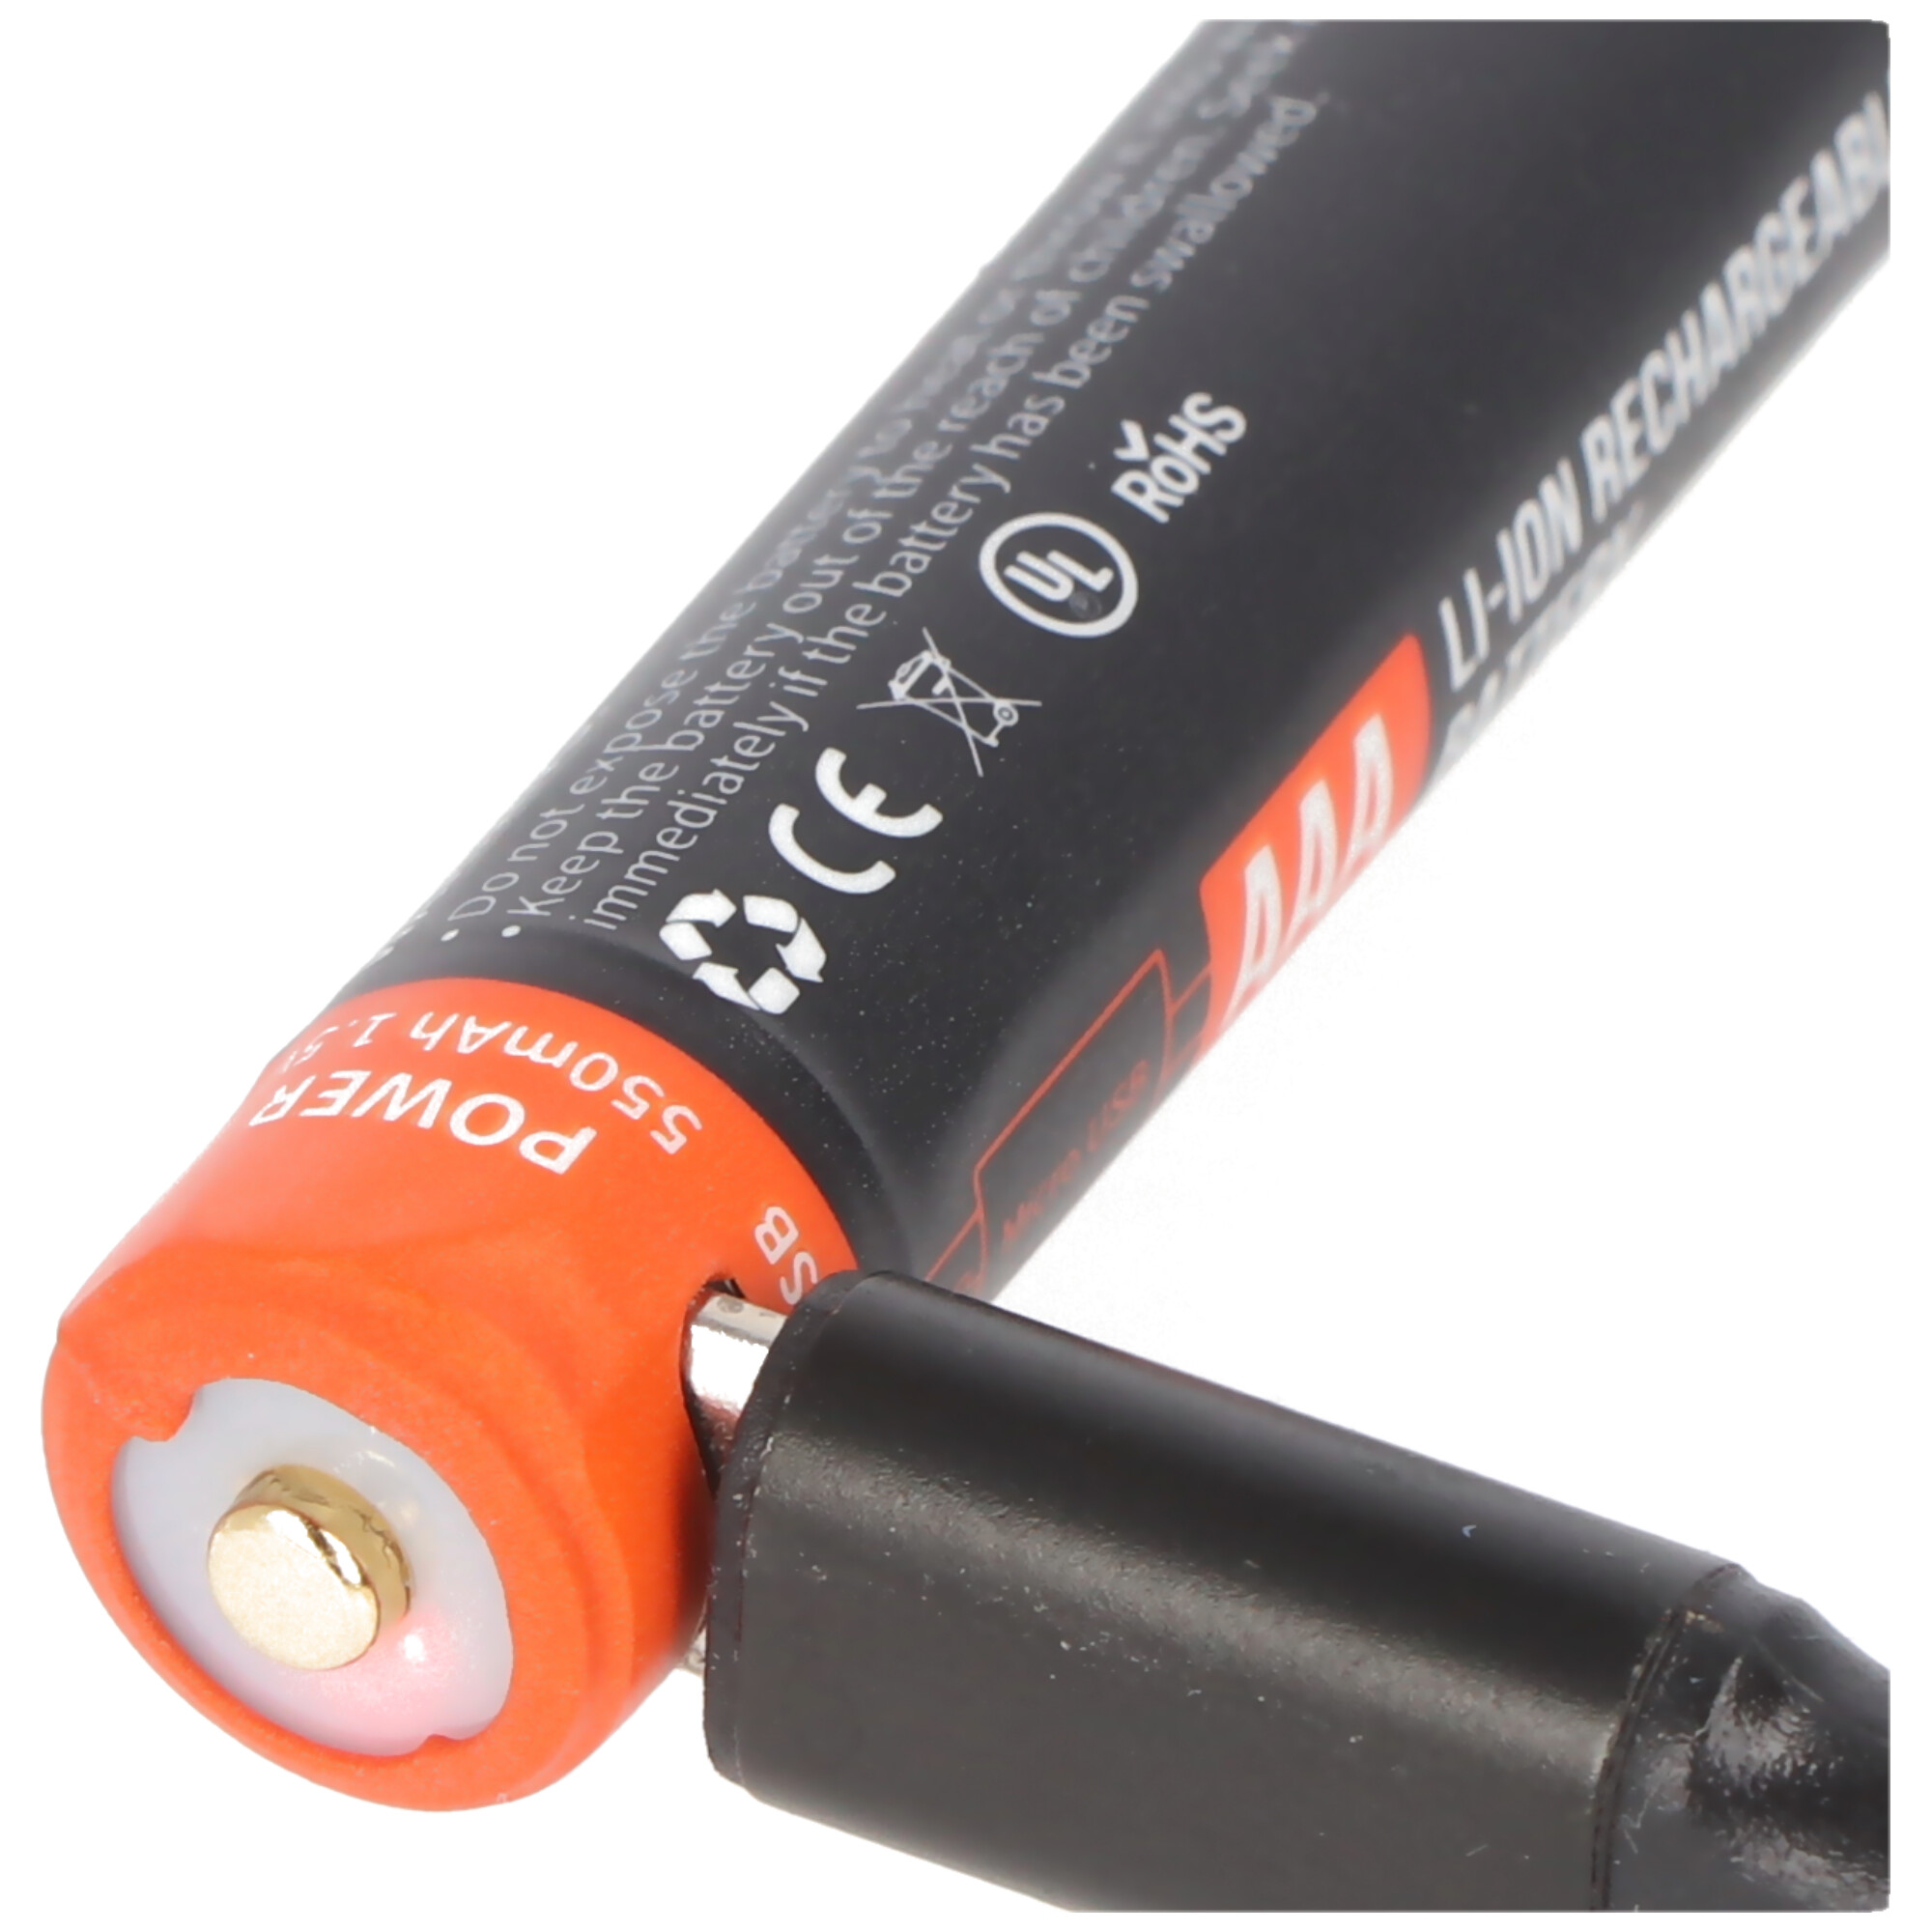 Rundzelle AAA, Li-ion, 1,5V, 550mAh, 0,8Wh, mit USB-Ladeanschluss